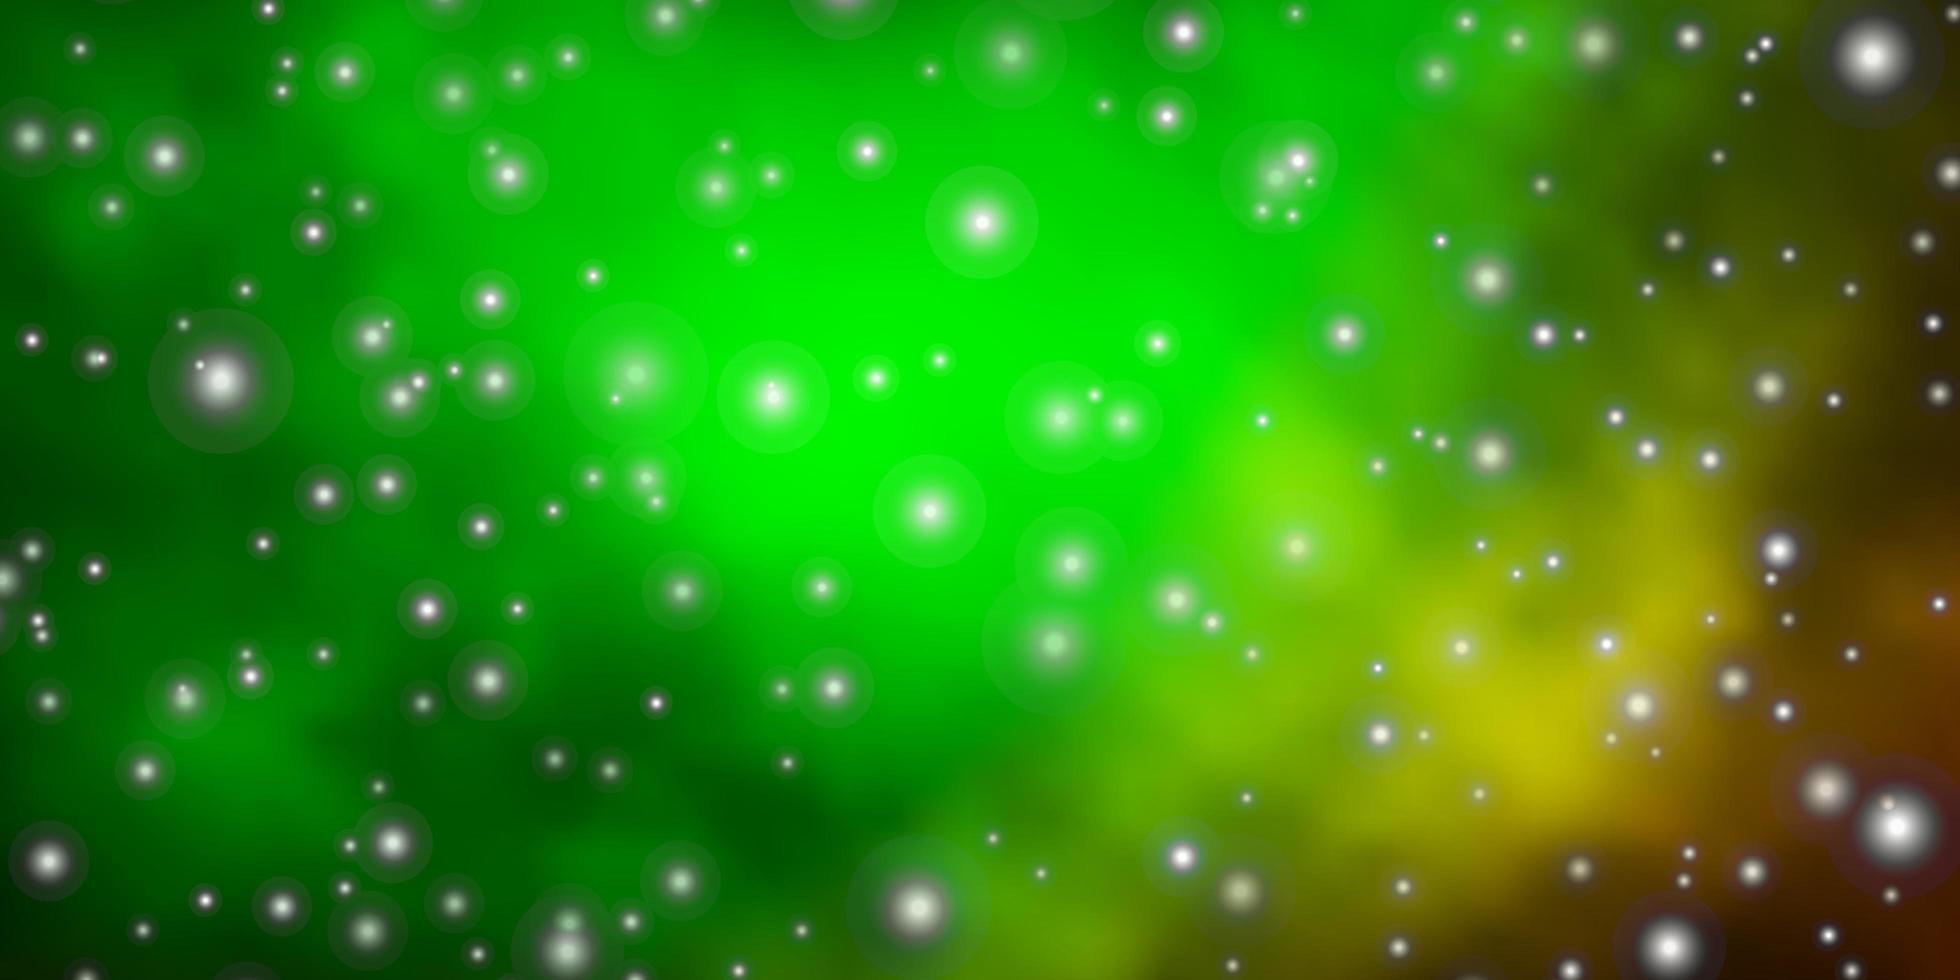 Dark Green vector layout with bright stars.